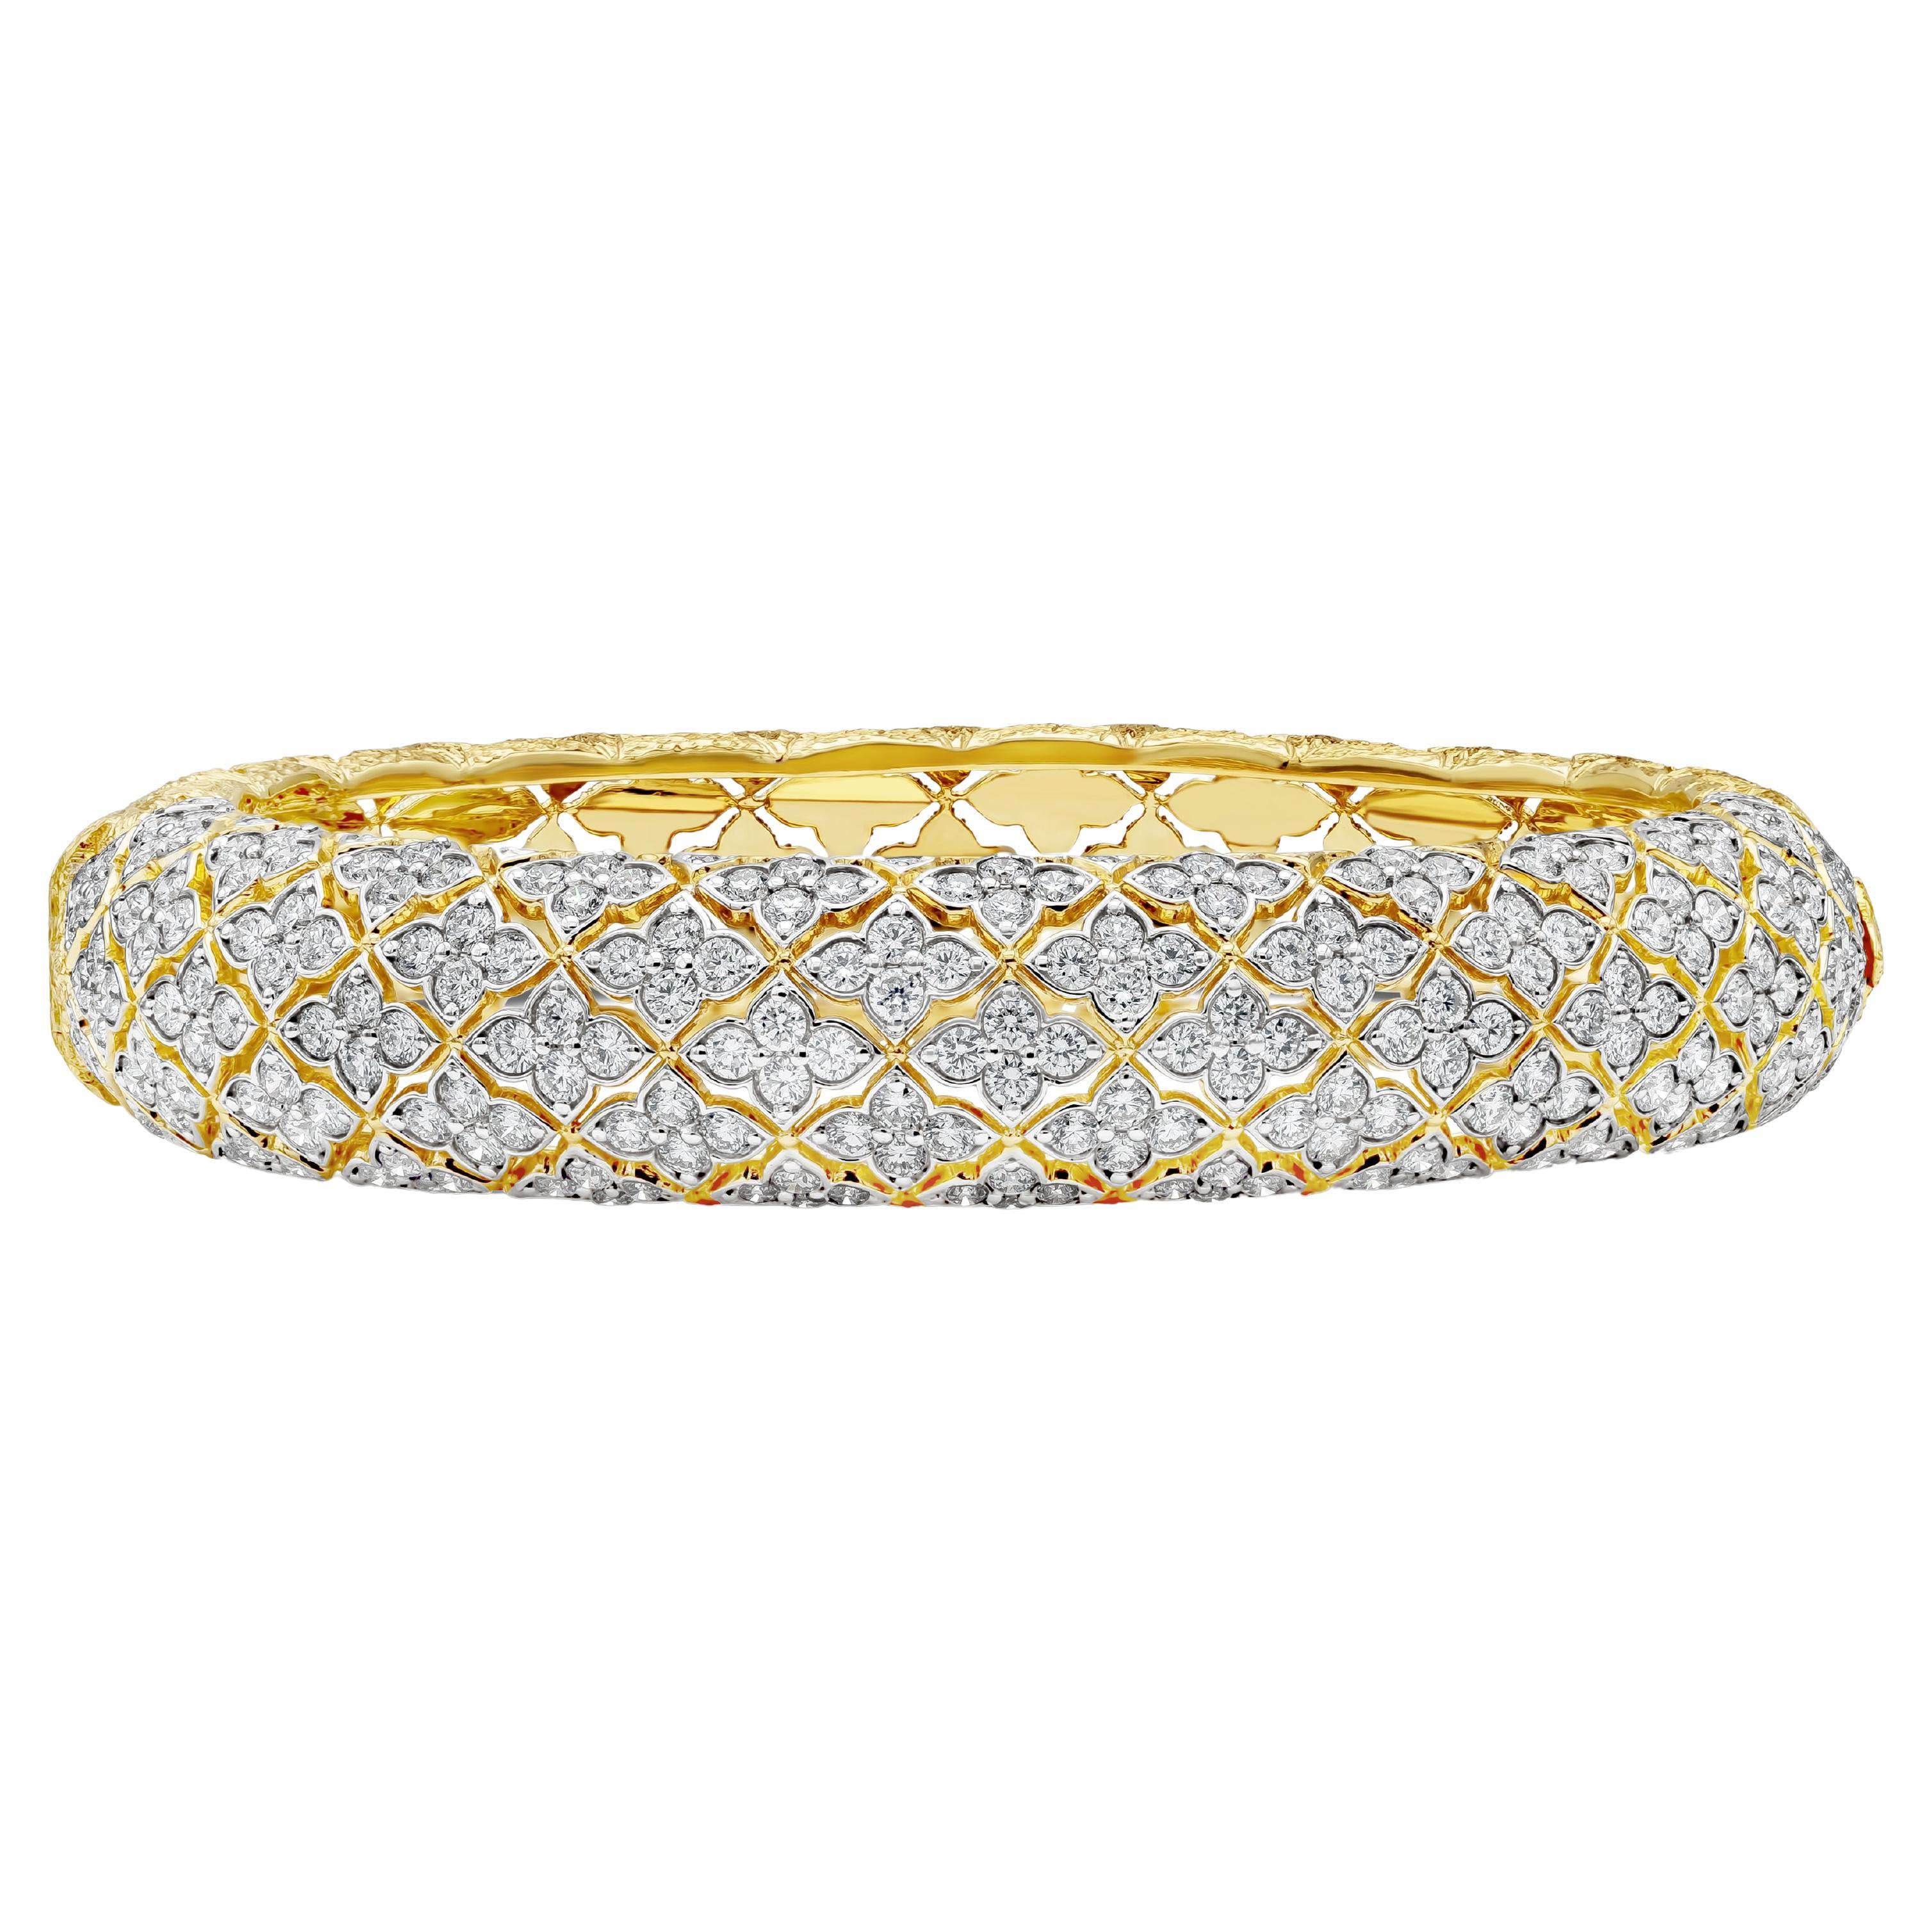 Roman Malakov 6.64 Carat Total Round Diamond in Floral Design Bangle Bracelet